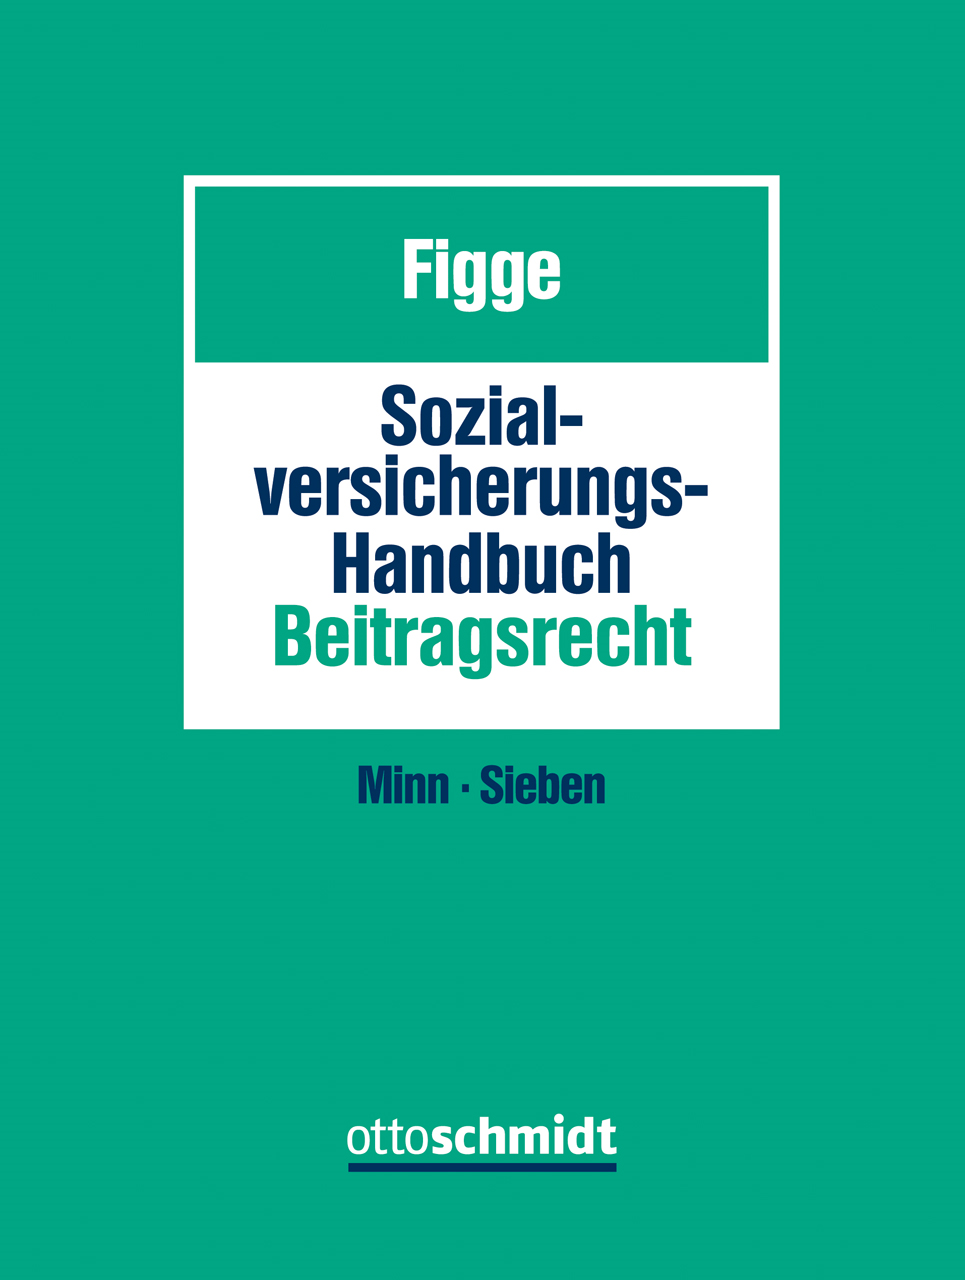 Abbildung: Sozialversicherungs-Handbuch Beitragsrecht